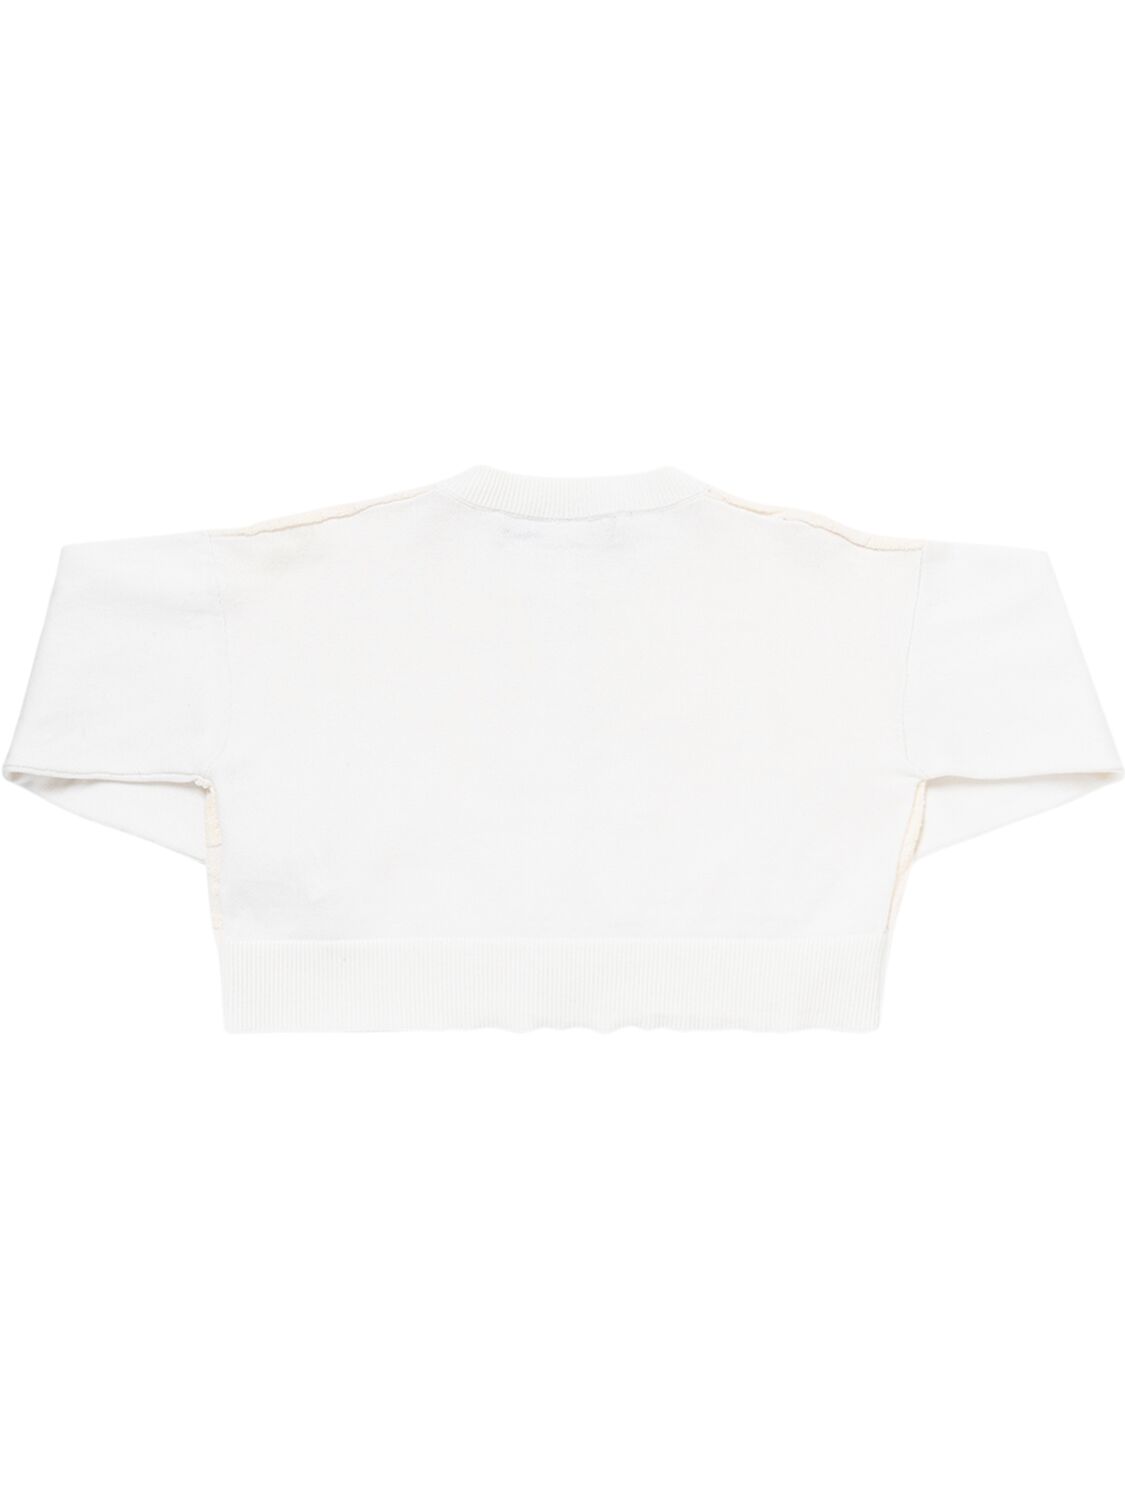 Shop Simonetta Cotton Blend Knit Cardigan In White,ivory